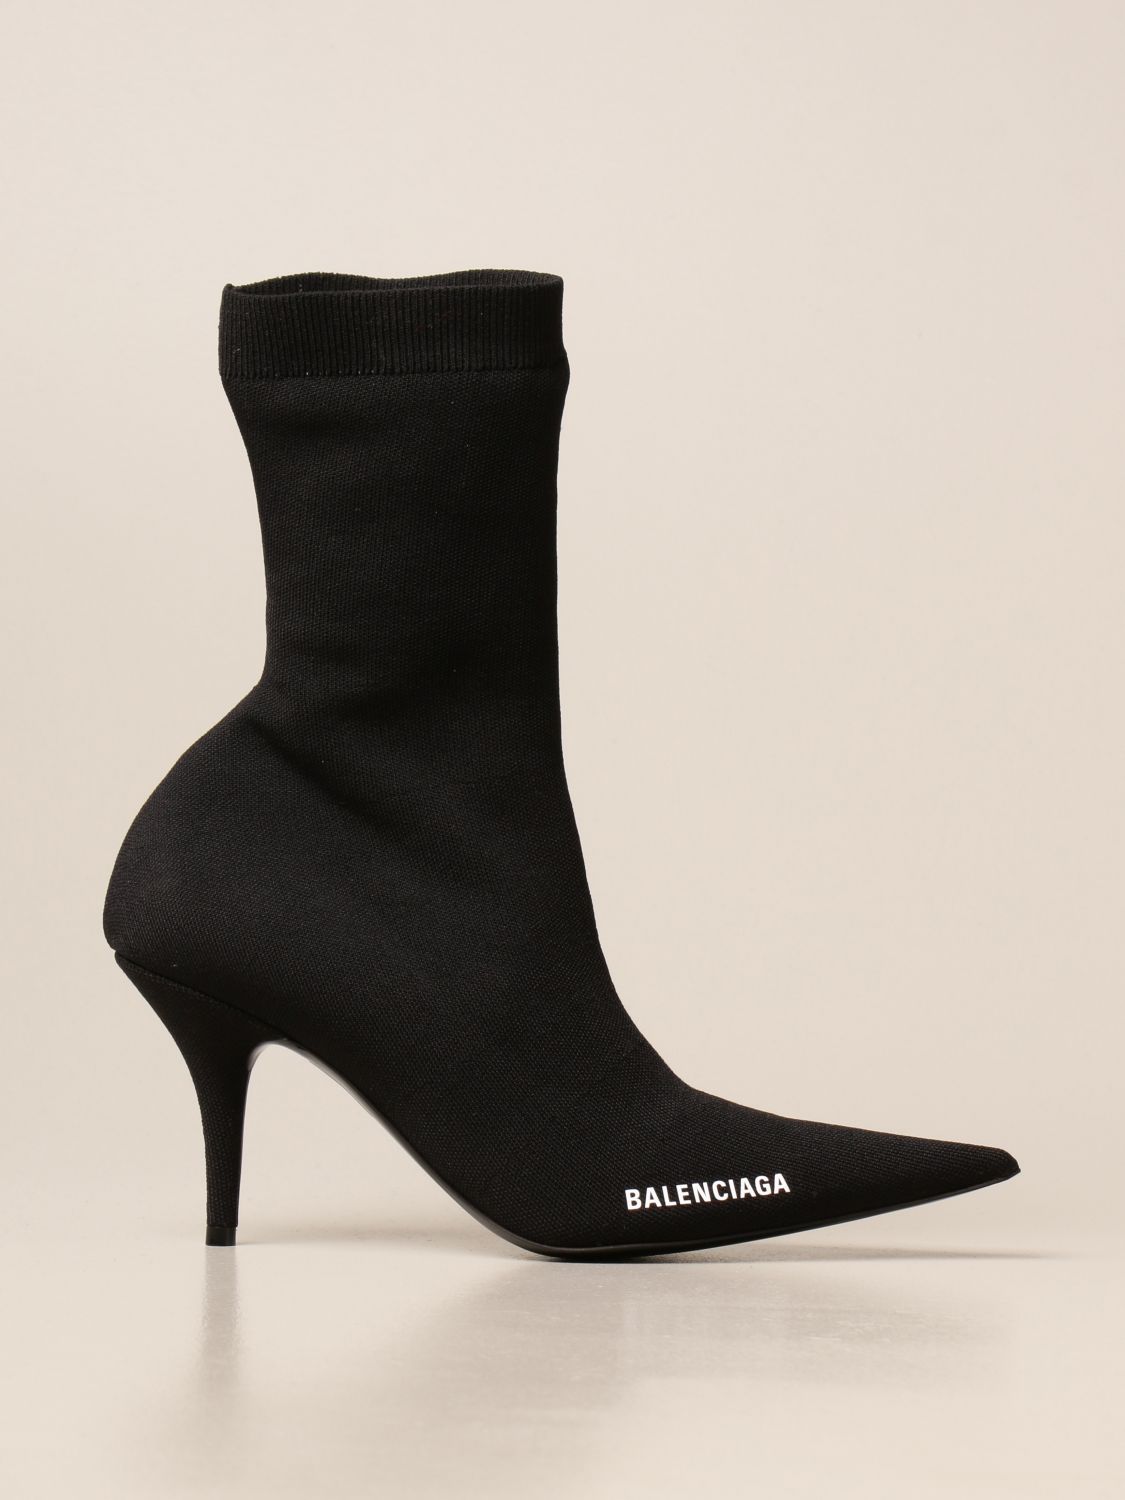 Top 14 Most Elegant And Fashionable Womens Balenciaga Boots